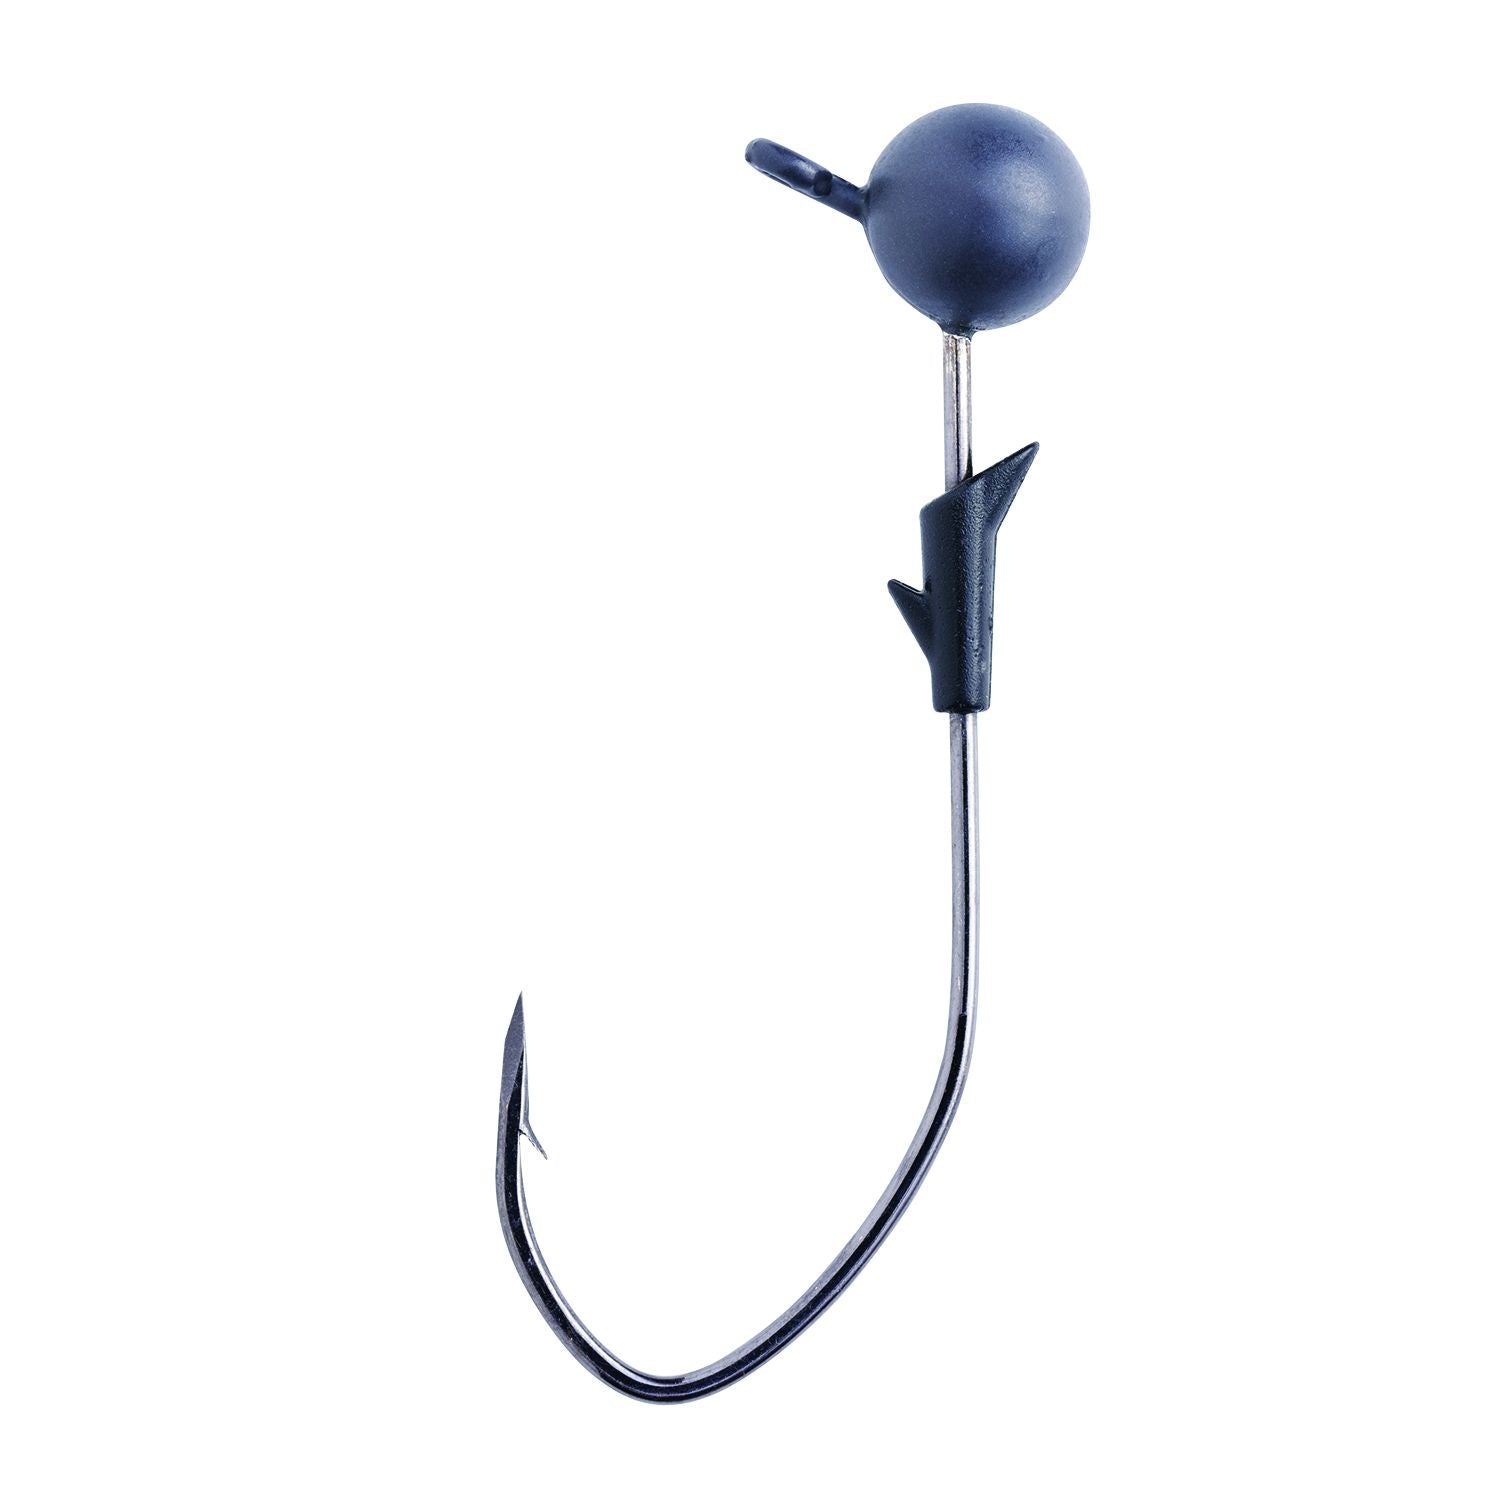 Eagle Claw Trokar Prov Bend Ball Head Jig 1/4 oz, Black Chrome Hook, Tungsten, per 2